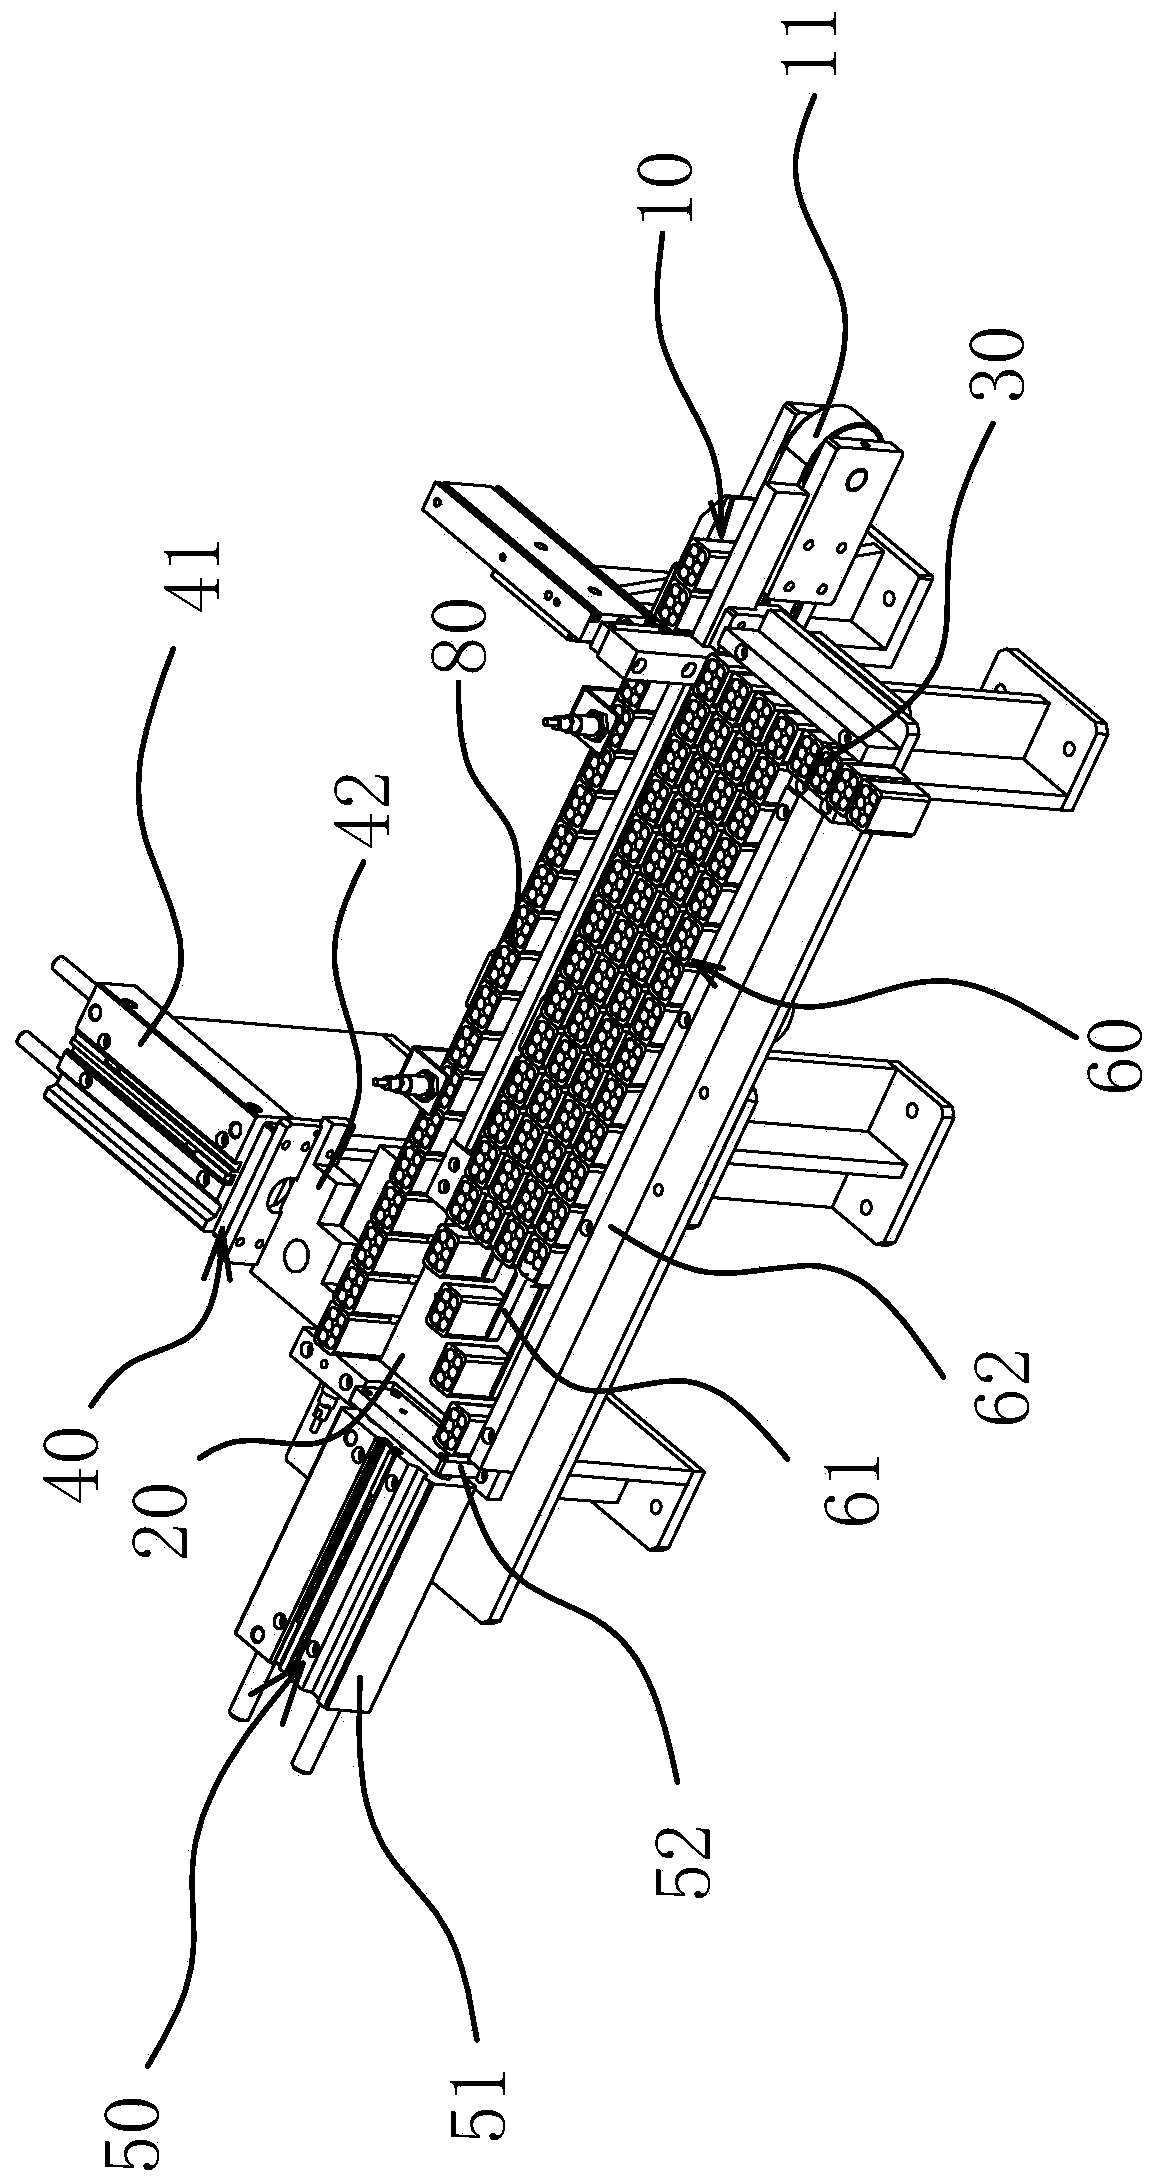 Battery conveying steering mechanism